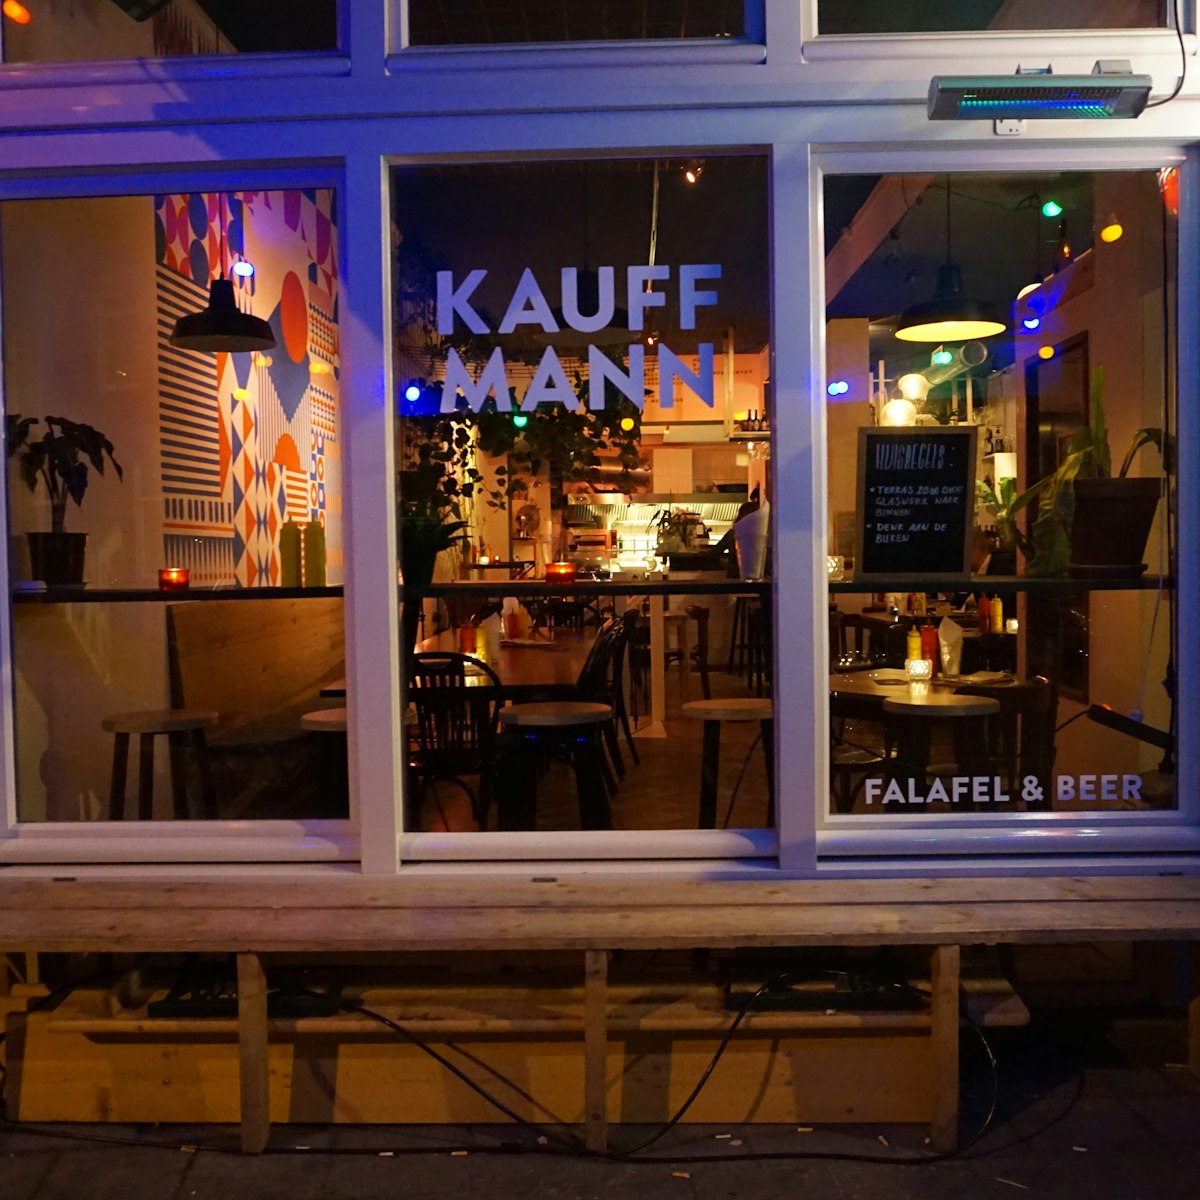 Stop off for a falafel pita at Kauffman